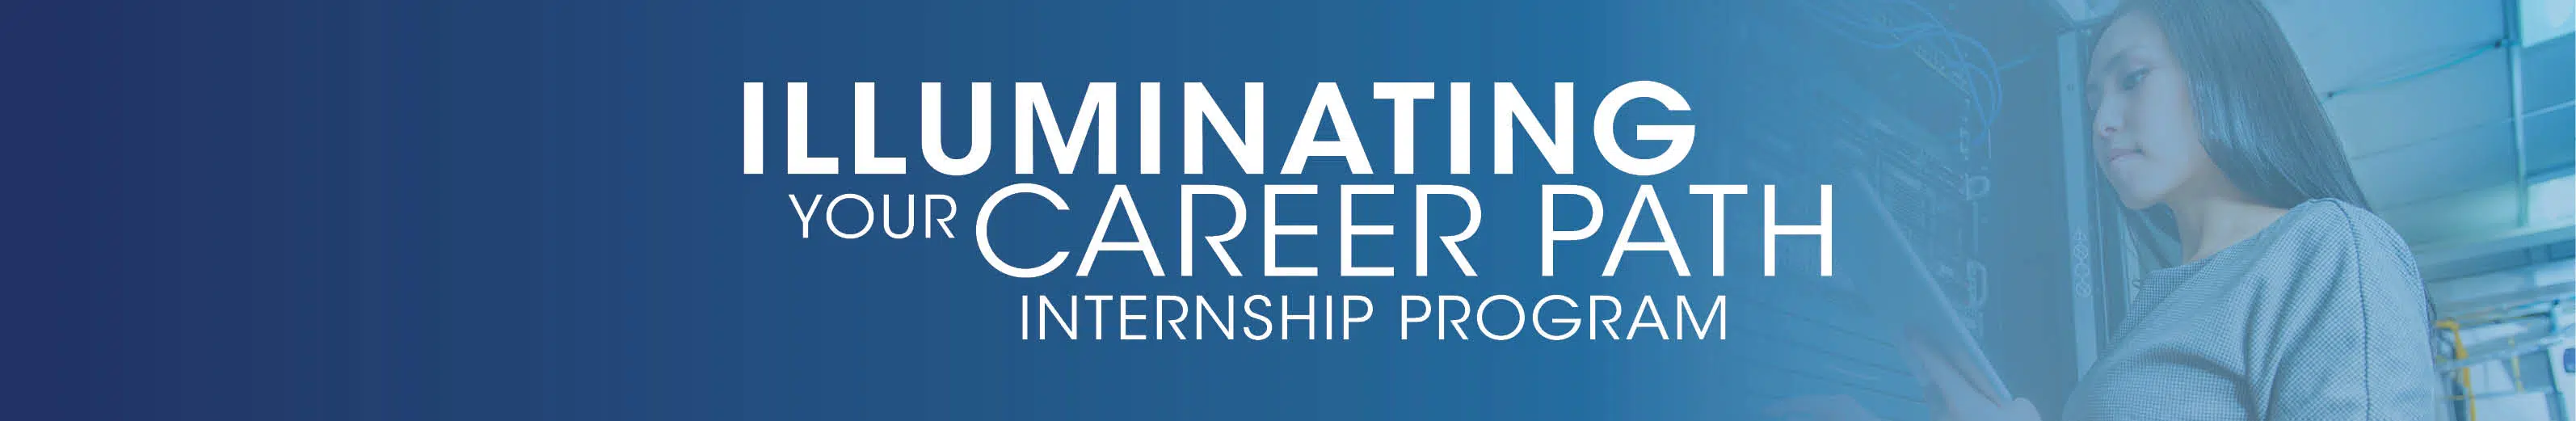 Illuminating your career path internship program